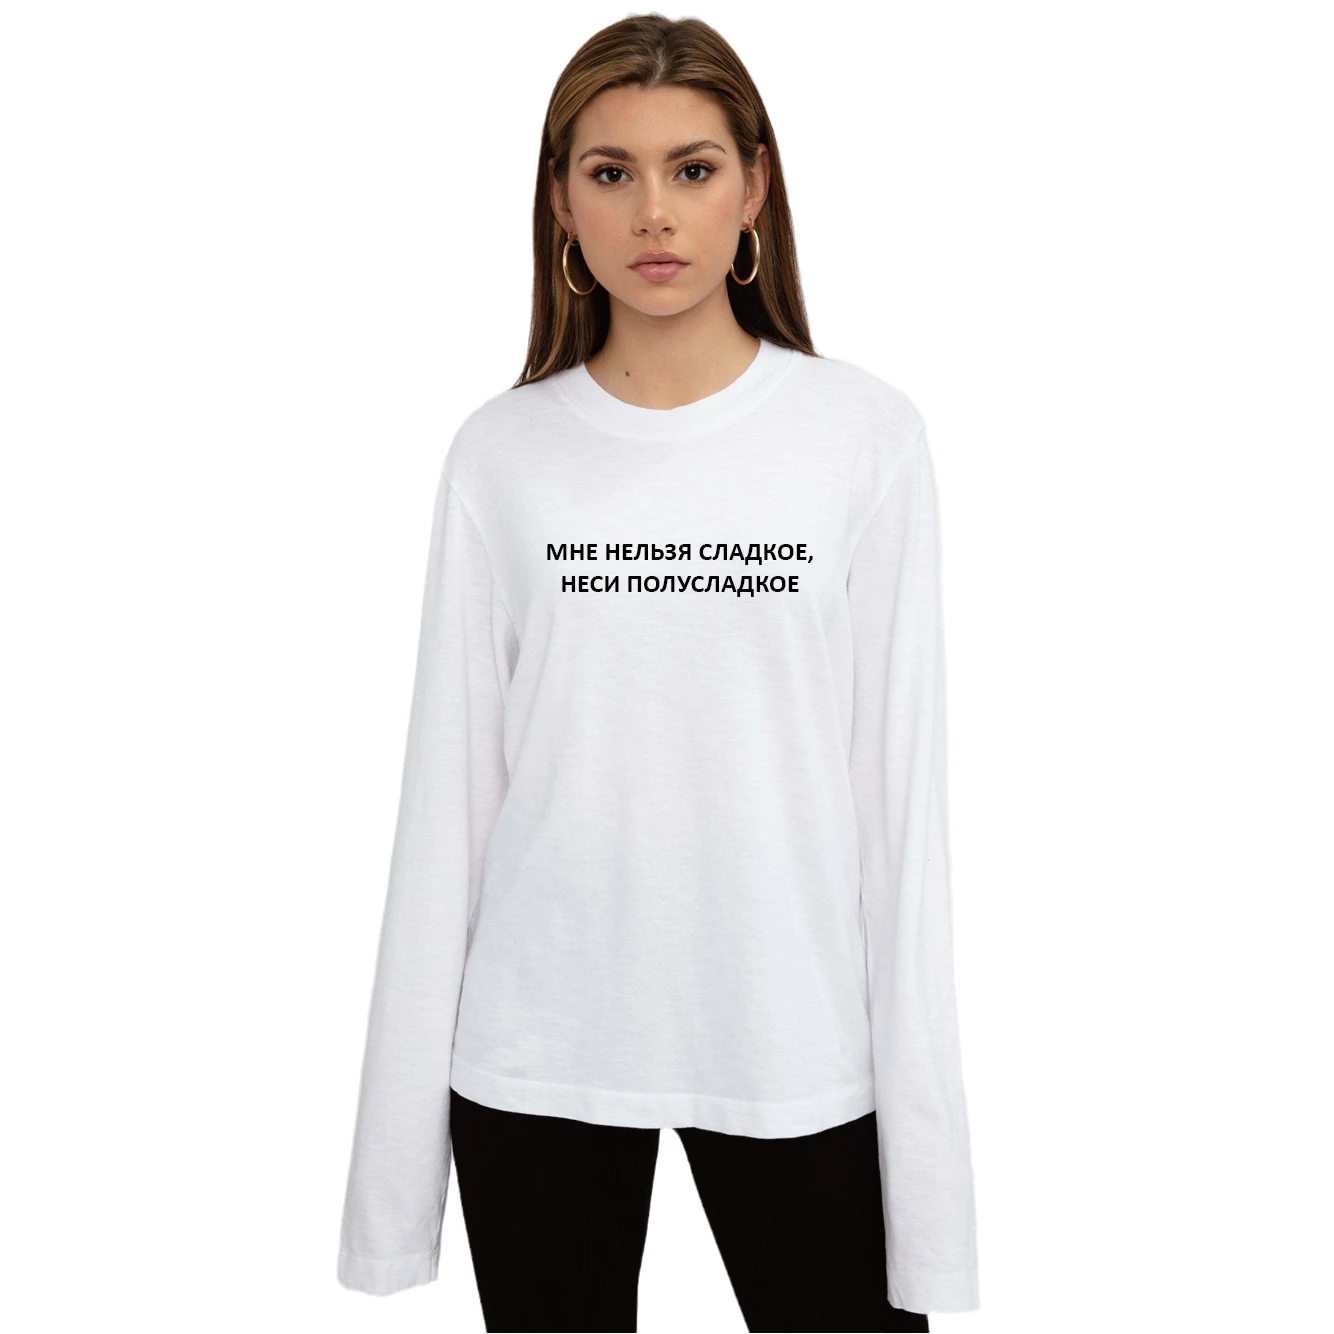 

Porzingis Autumn New Women's Long-Sleeved T-Shirt Tops Russian Inscription МНЕ НЕЛЬЗЯ СЛАДКОЕ, НЕСИ ПОЛУСЛАДКОЕ White Shirts